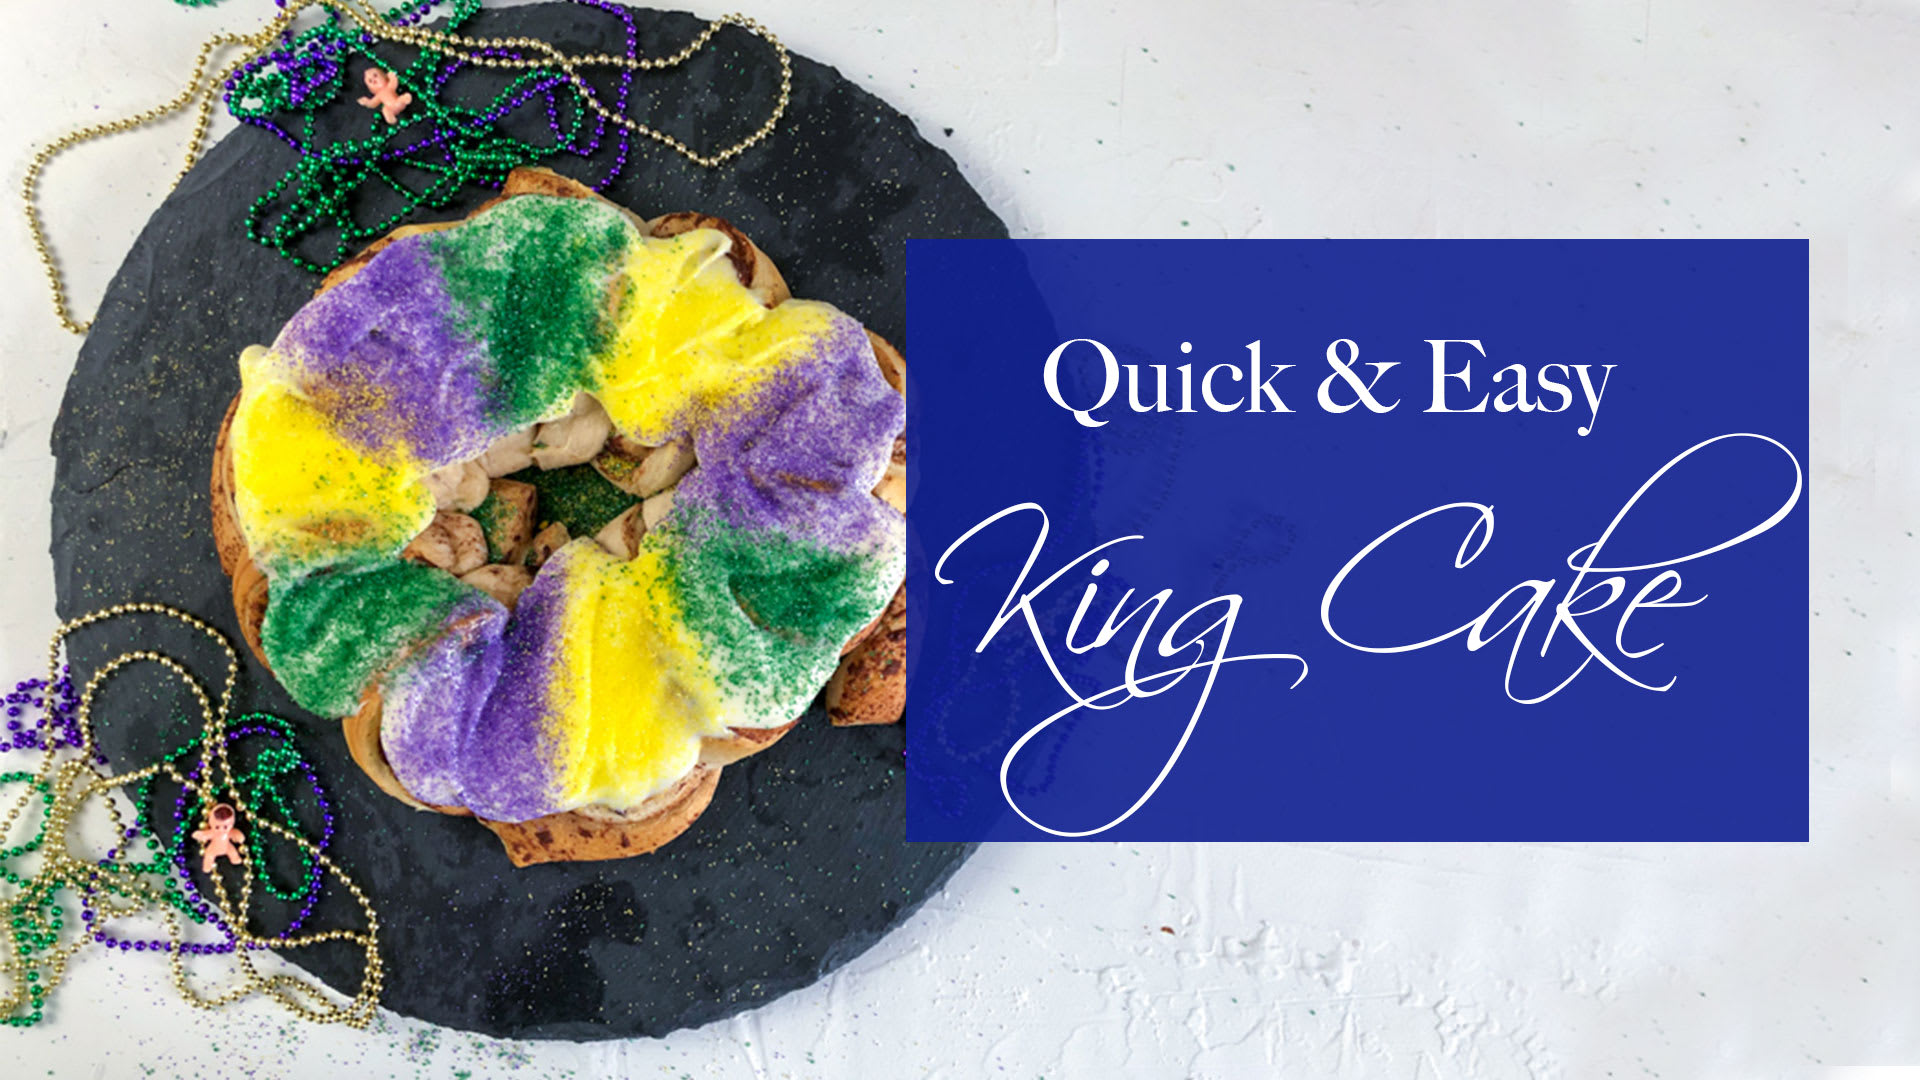 Mini King Cakes - Southern Cast Iron